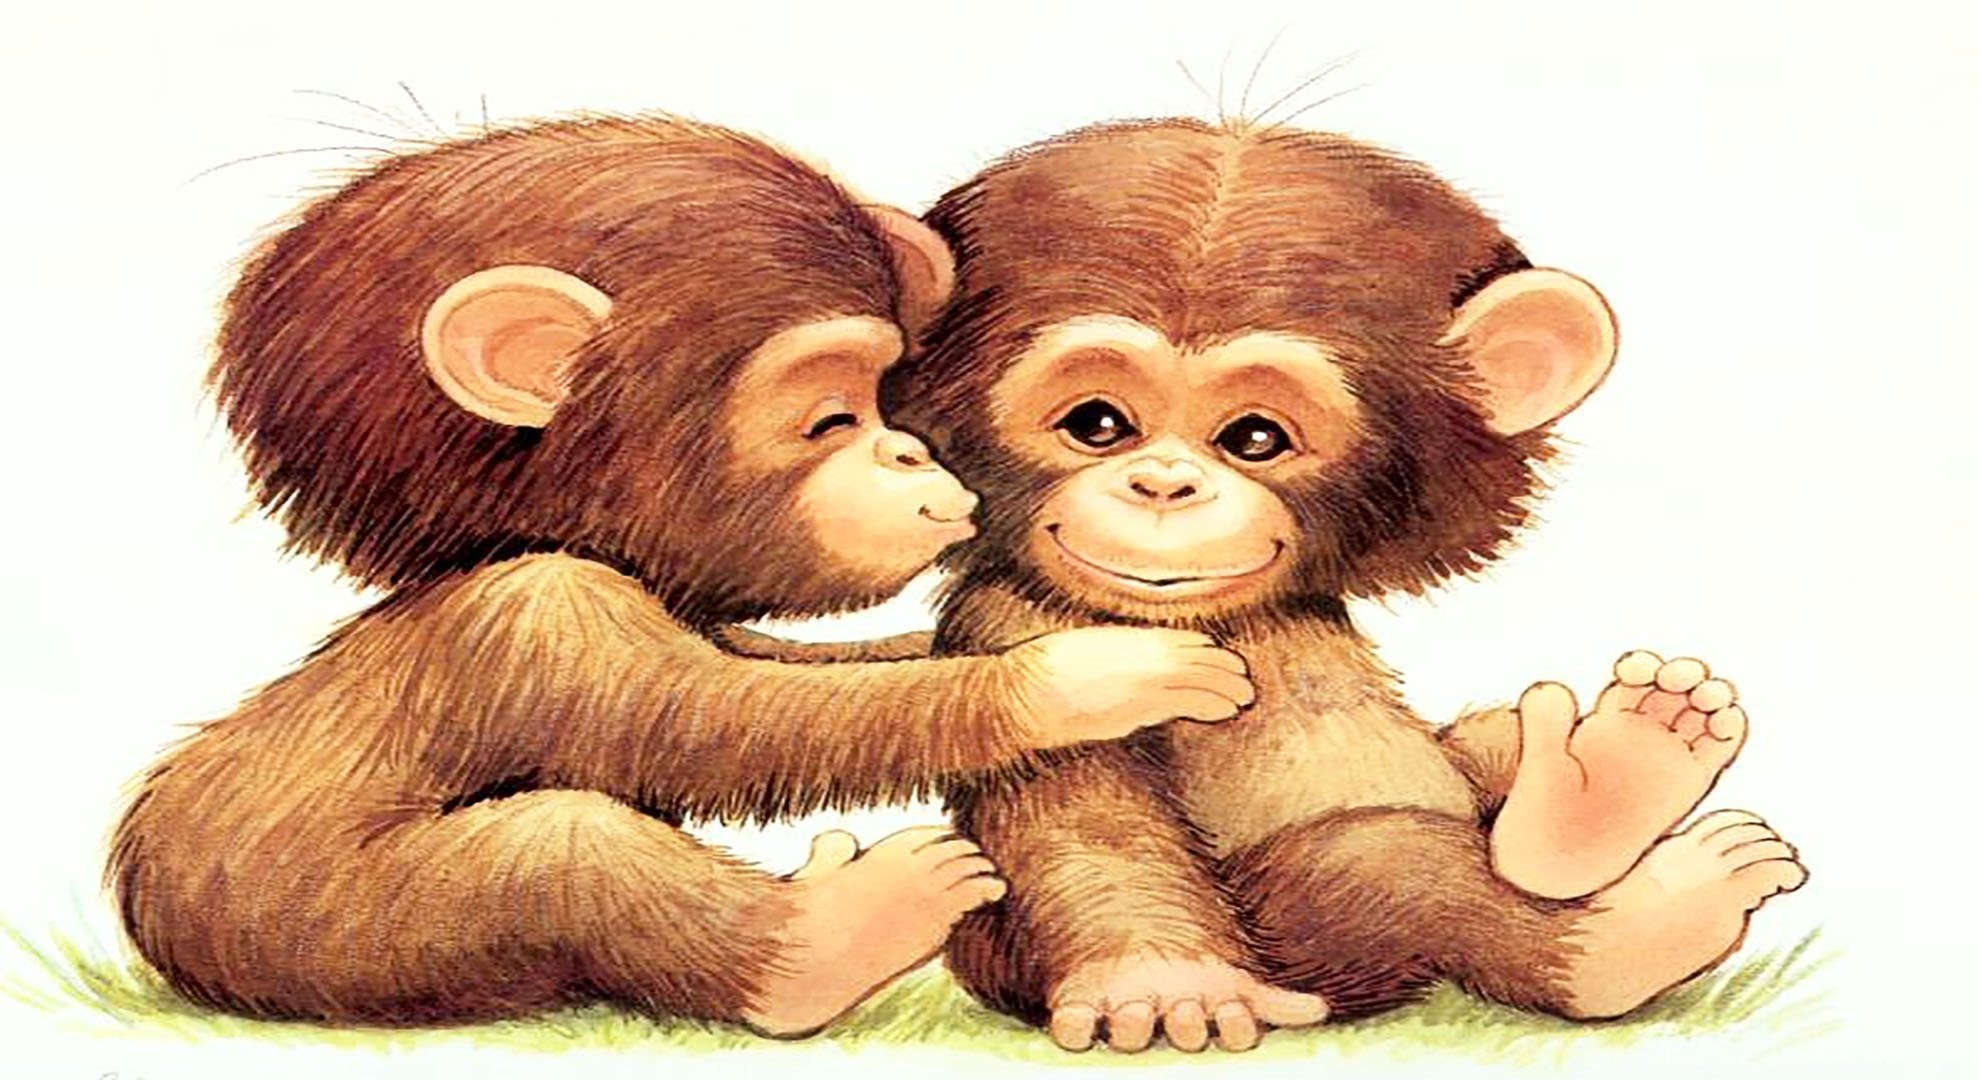 Cute Sweet Hippie Monkey iPhone 8 Wallpapers Free Download